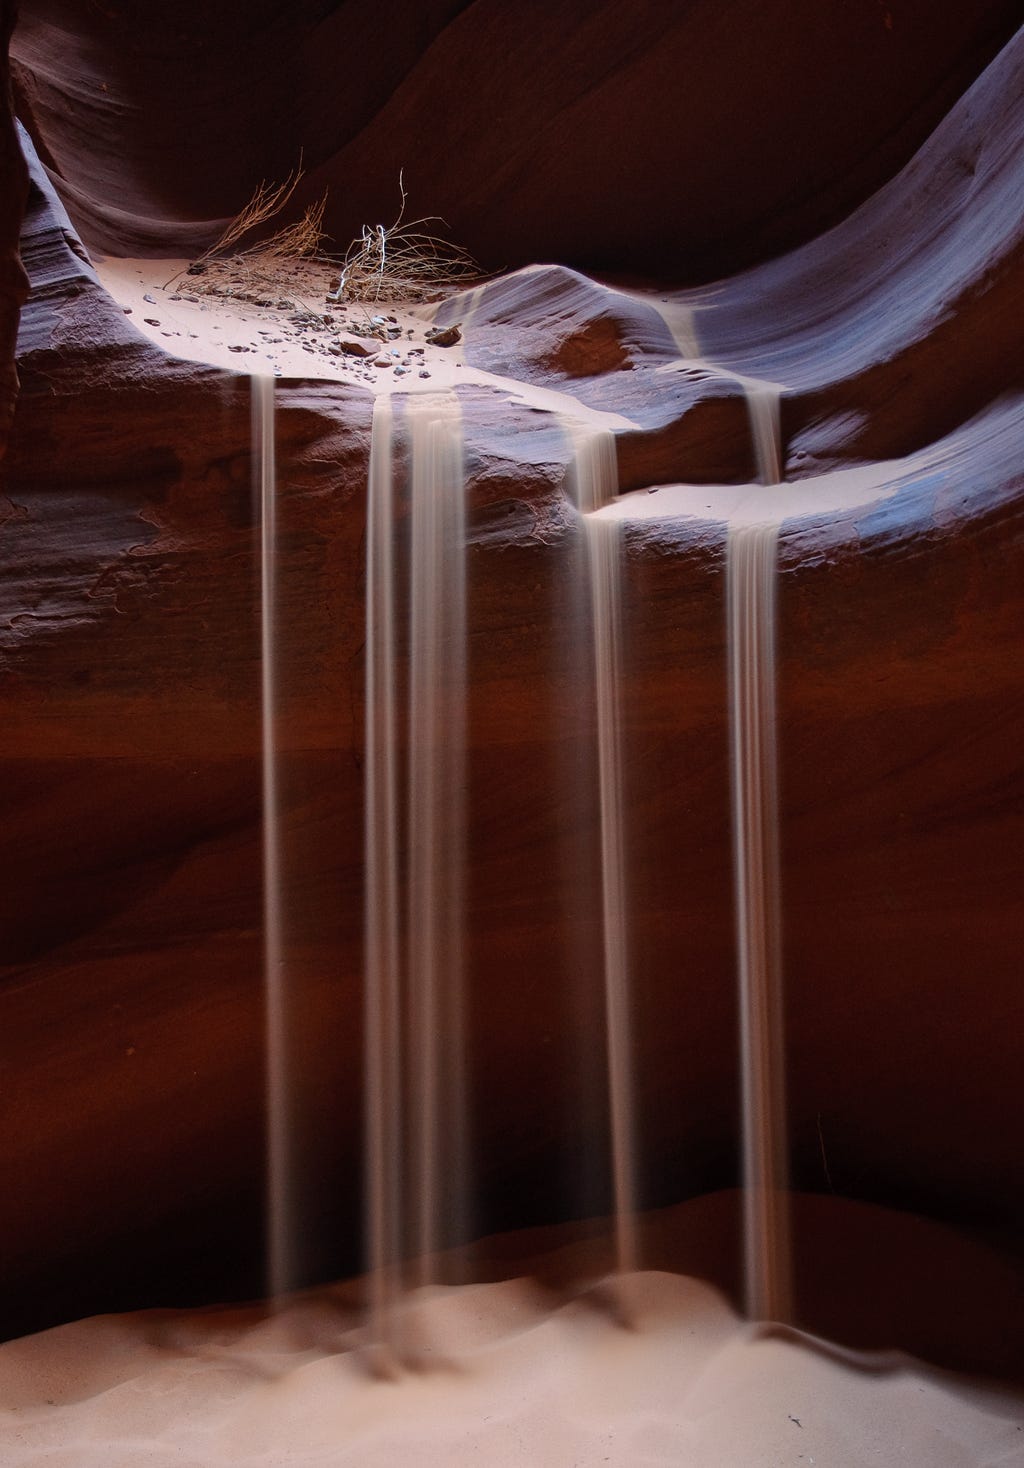 Sand Waterfall in Antelope Canyon-Photo by Alan Huett